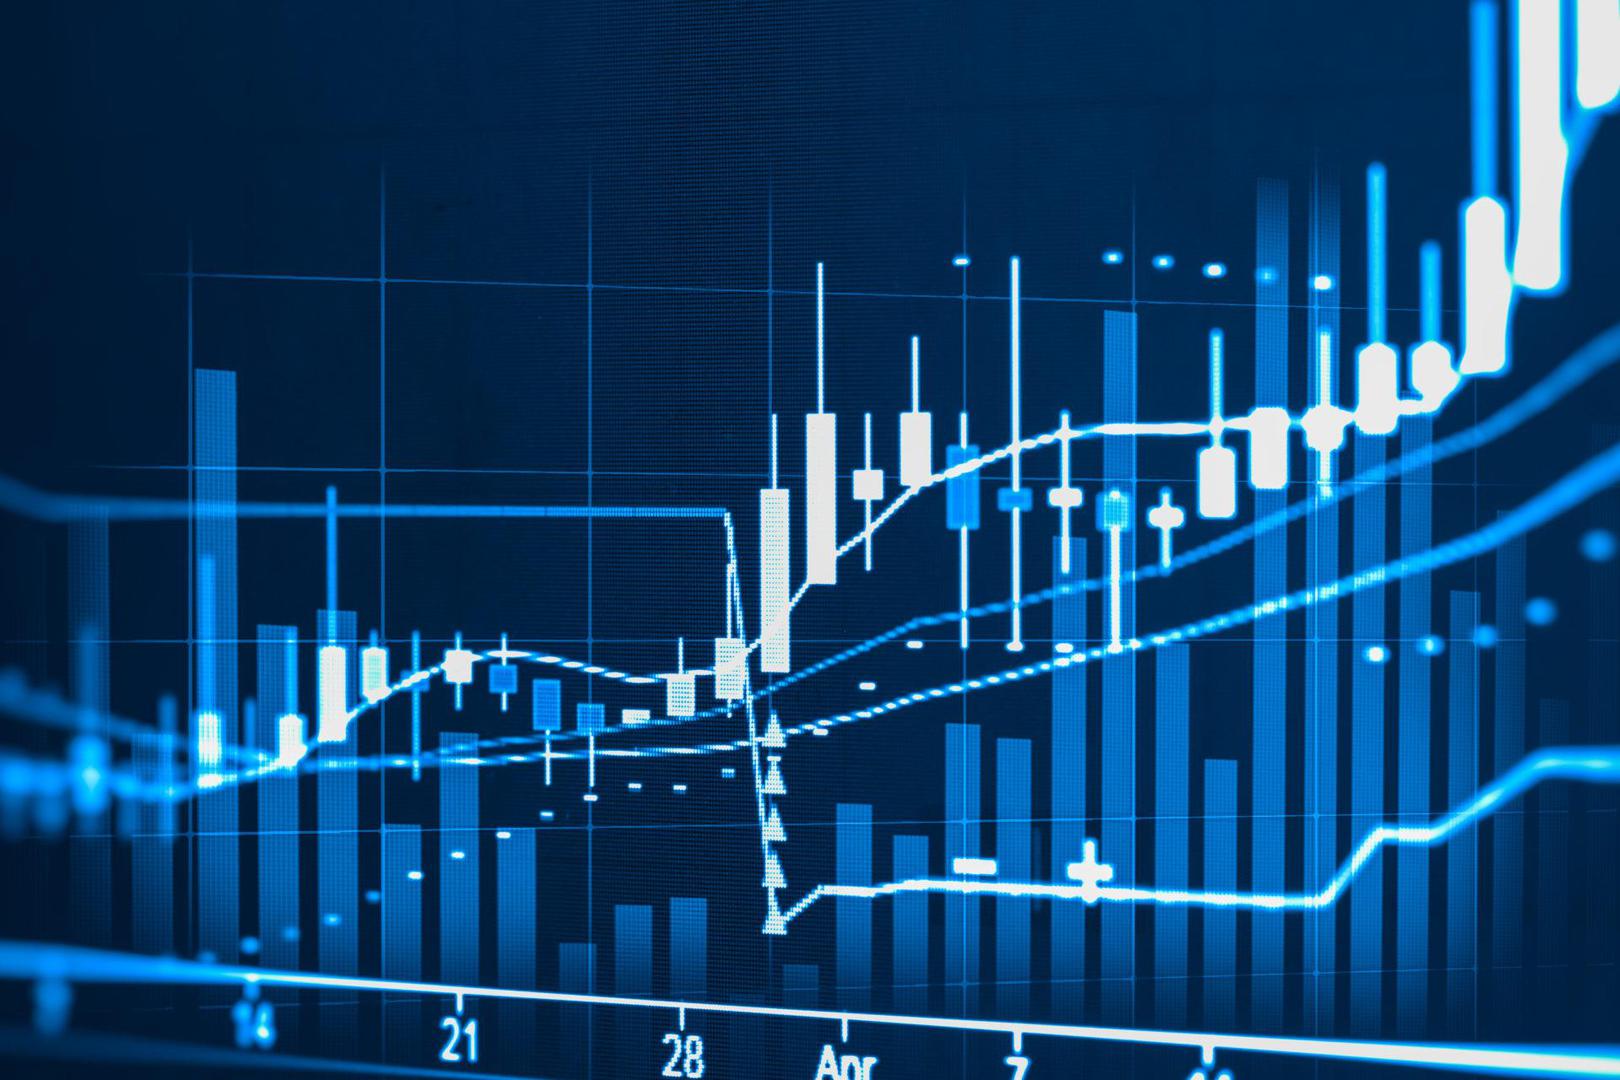 Index graph stock market financial data analysis japanese candlesticks trading